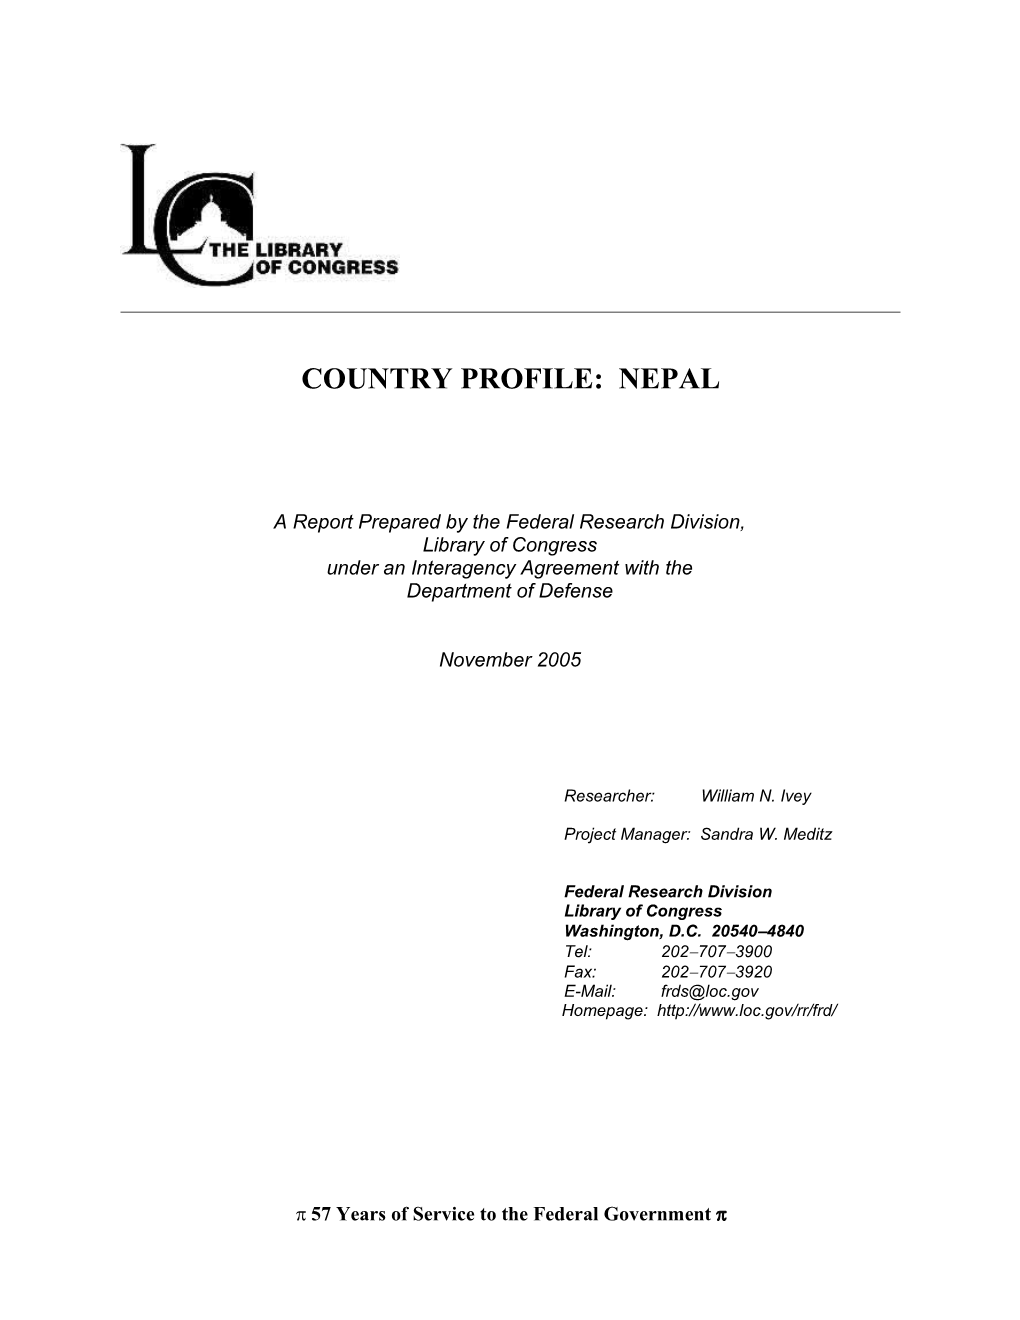 Country Profile: Nepal